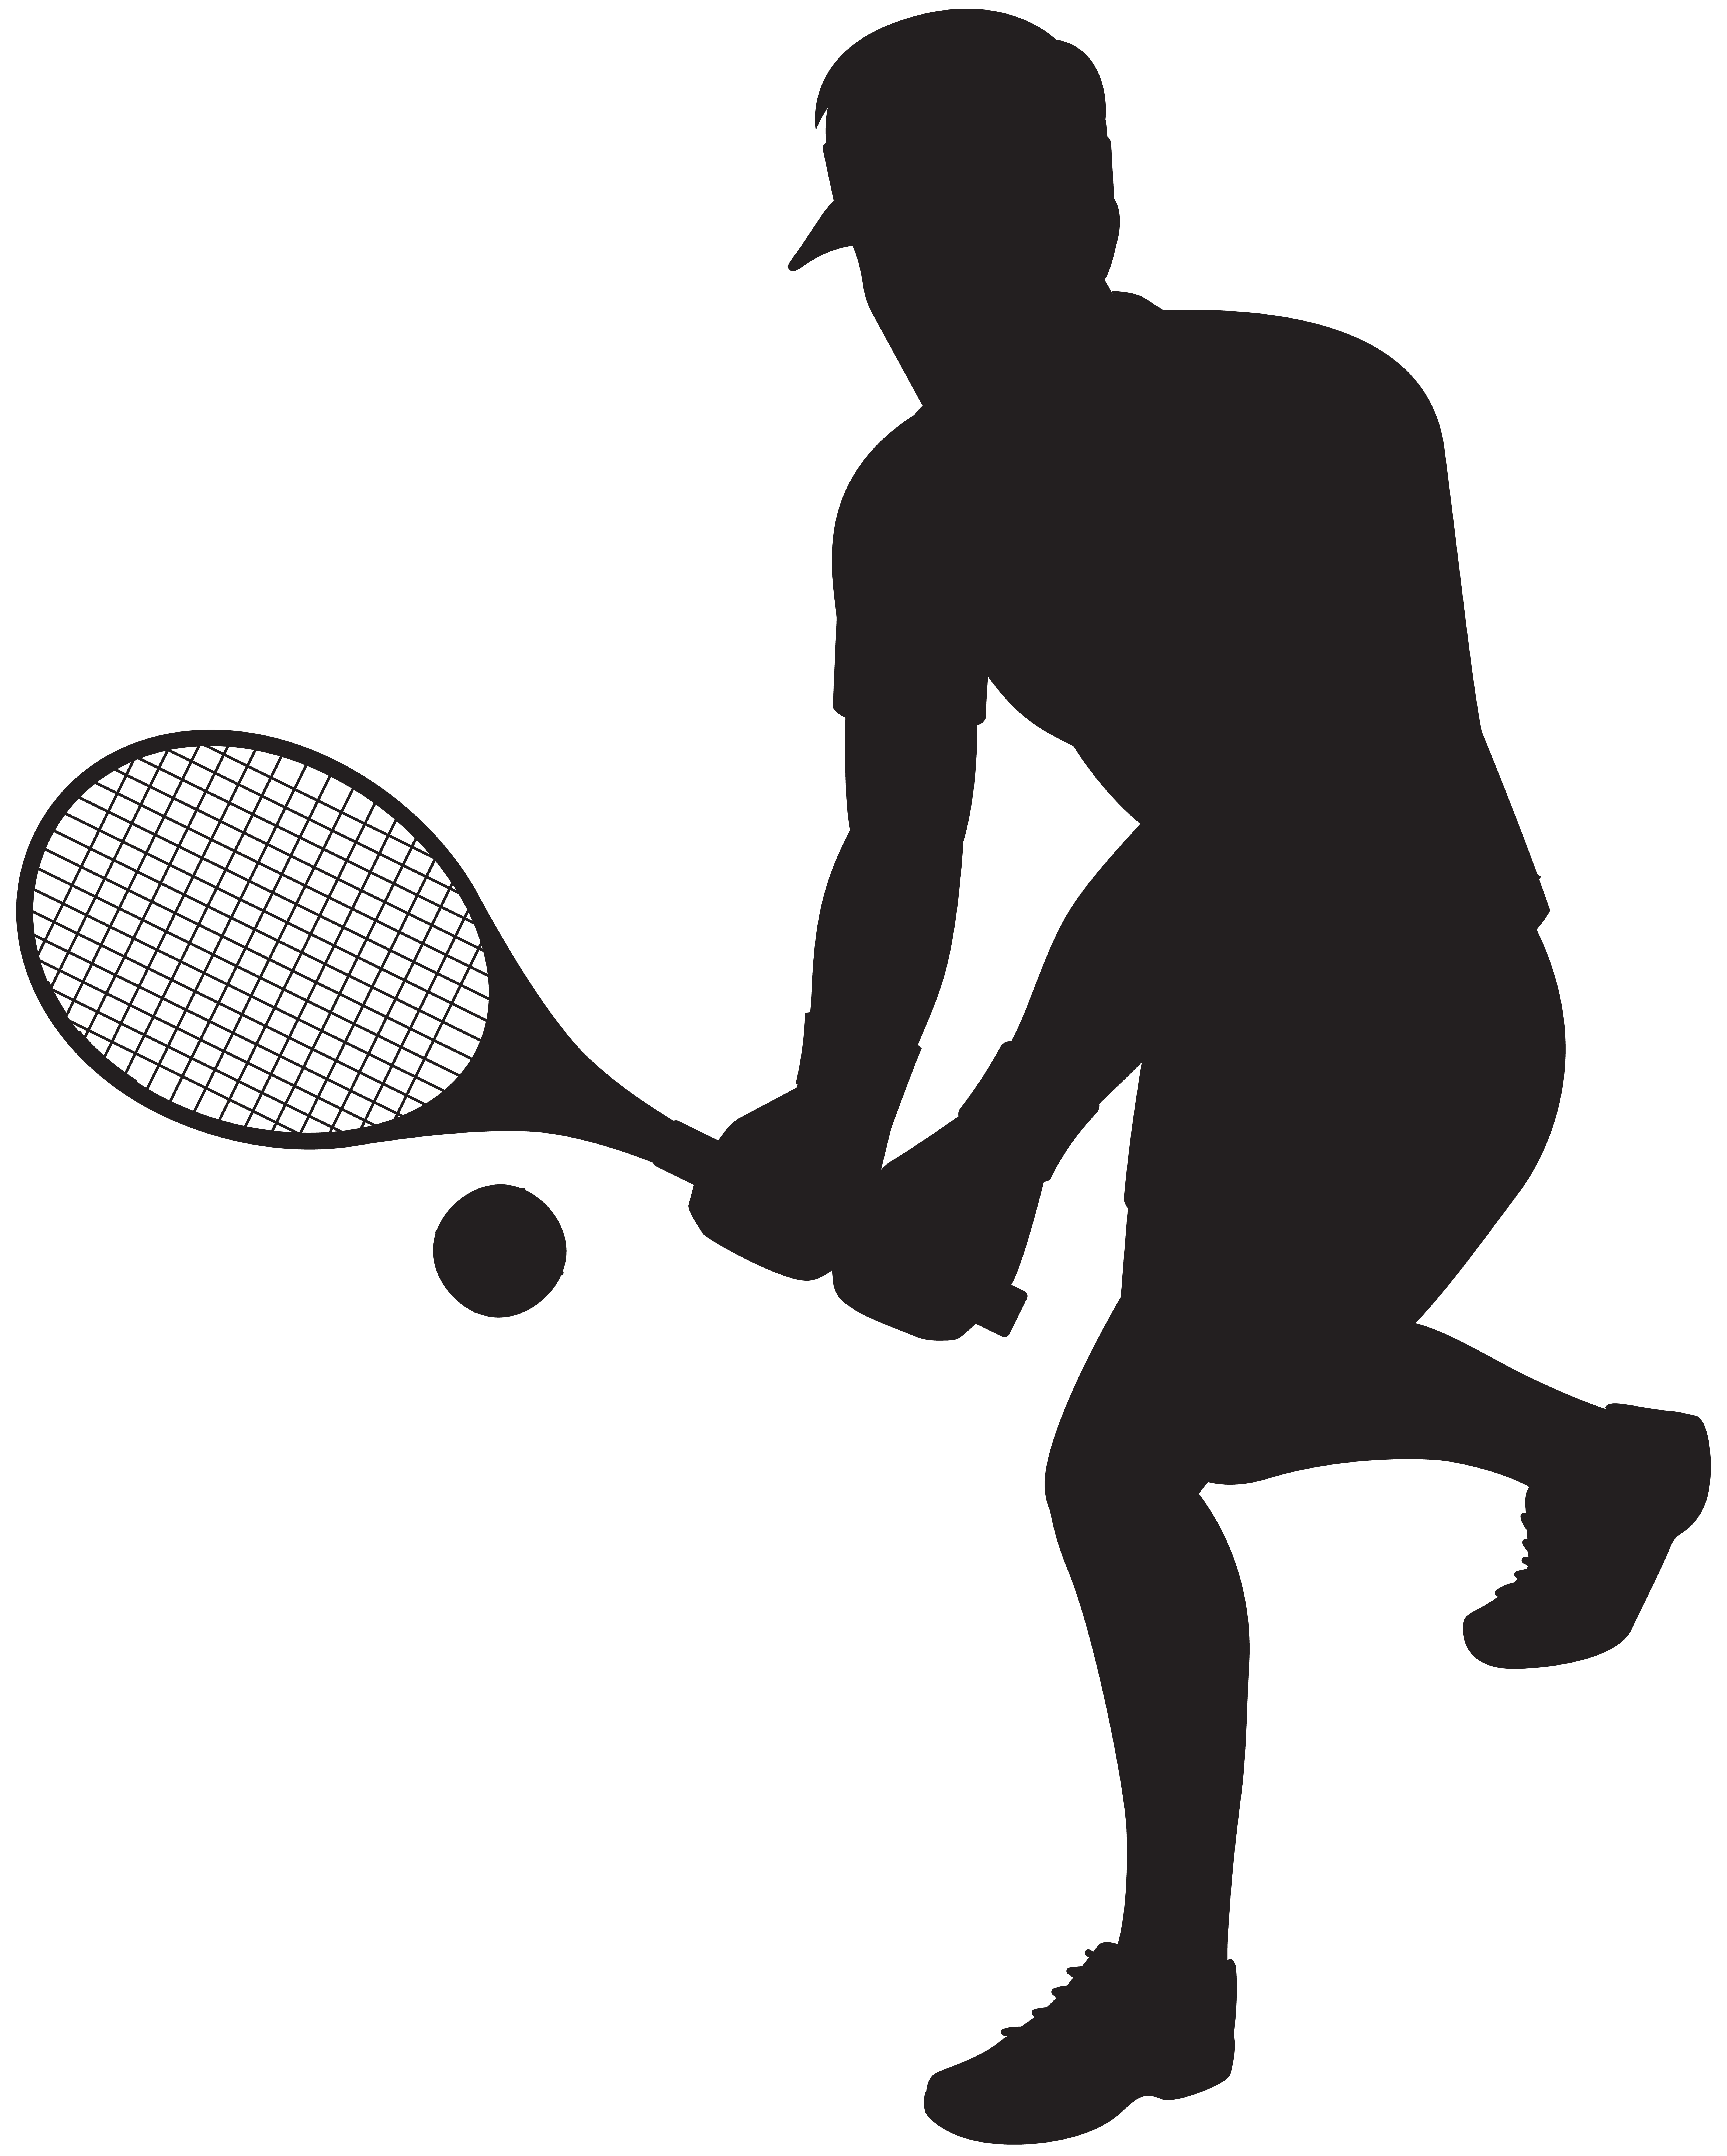 Tennis Player Silhouette Clip Art Image